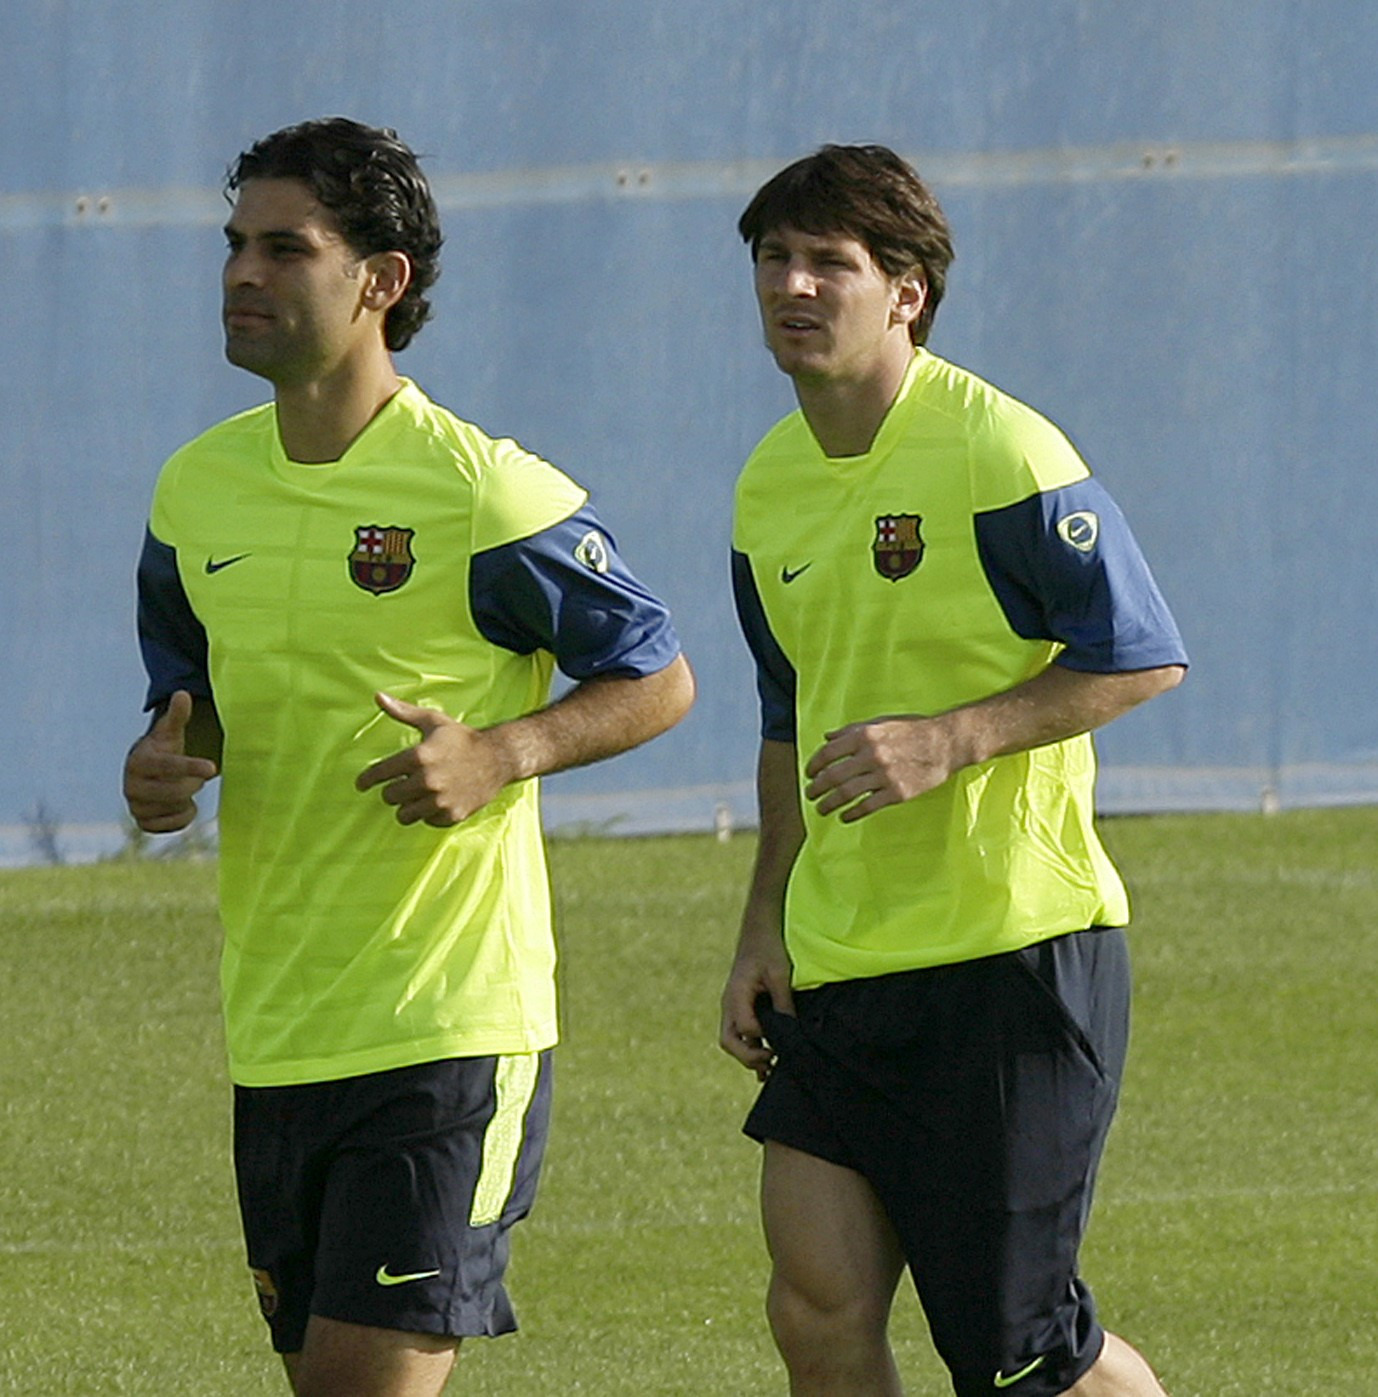 رافاييل ماركيز وليونيل ميسي خلال تدريب لبرشلونة - 28 يوليو 2009